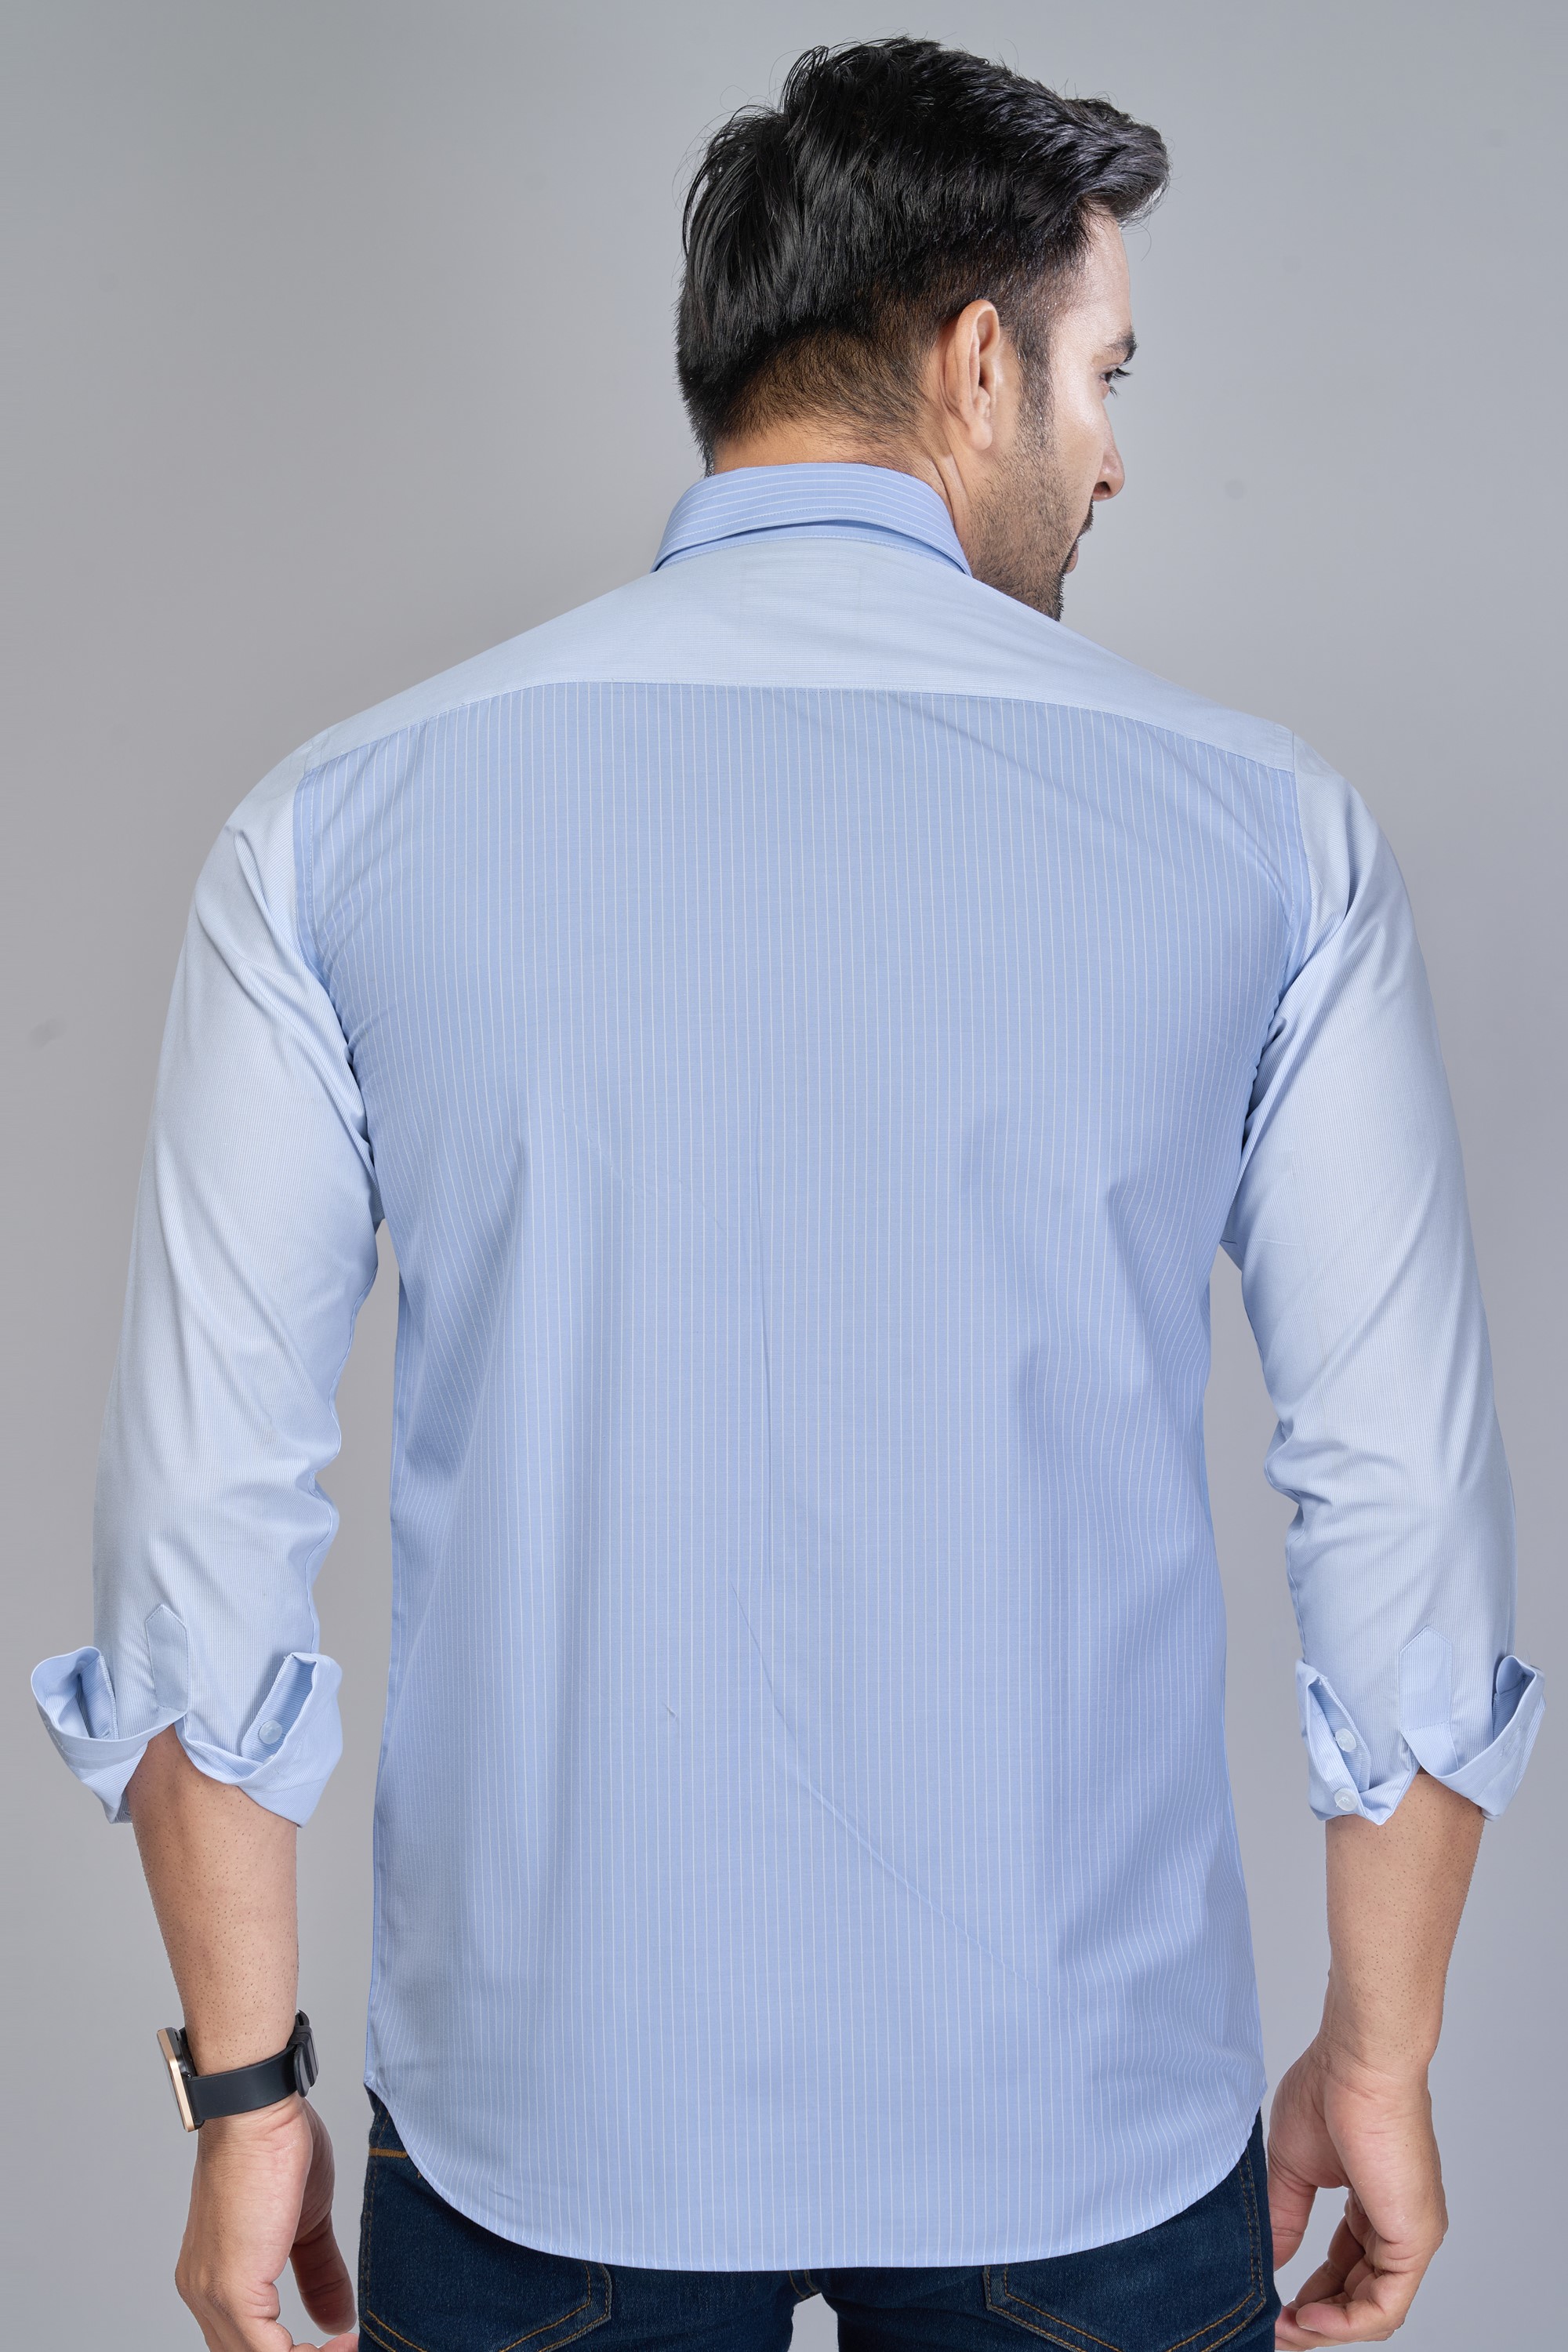 blue lining shirt for men